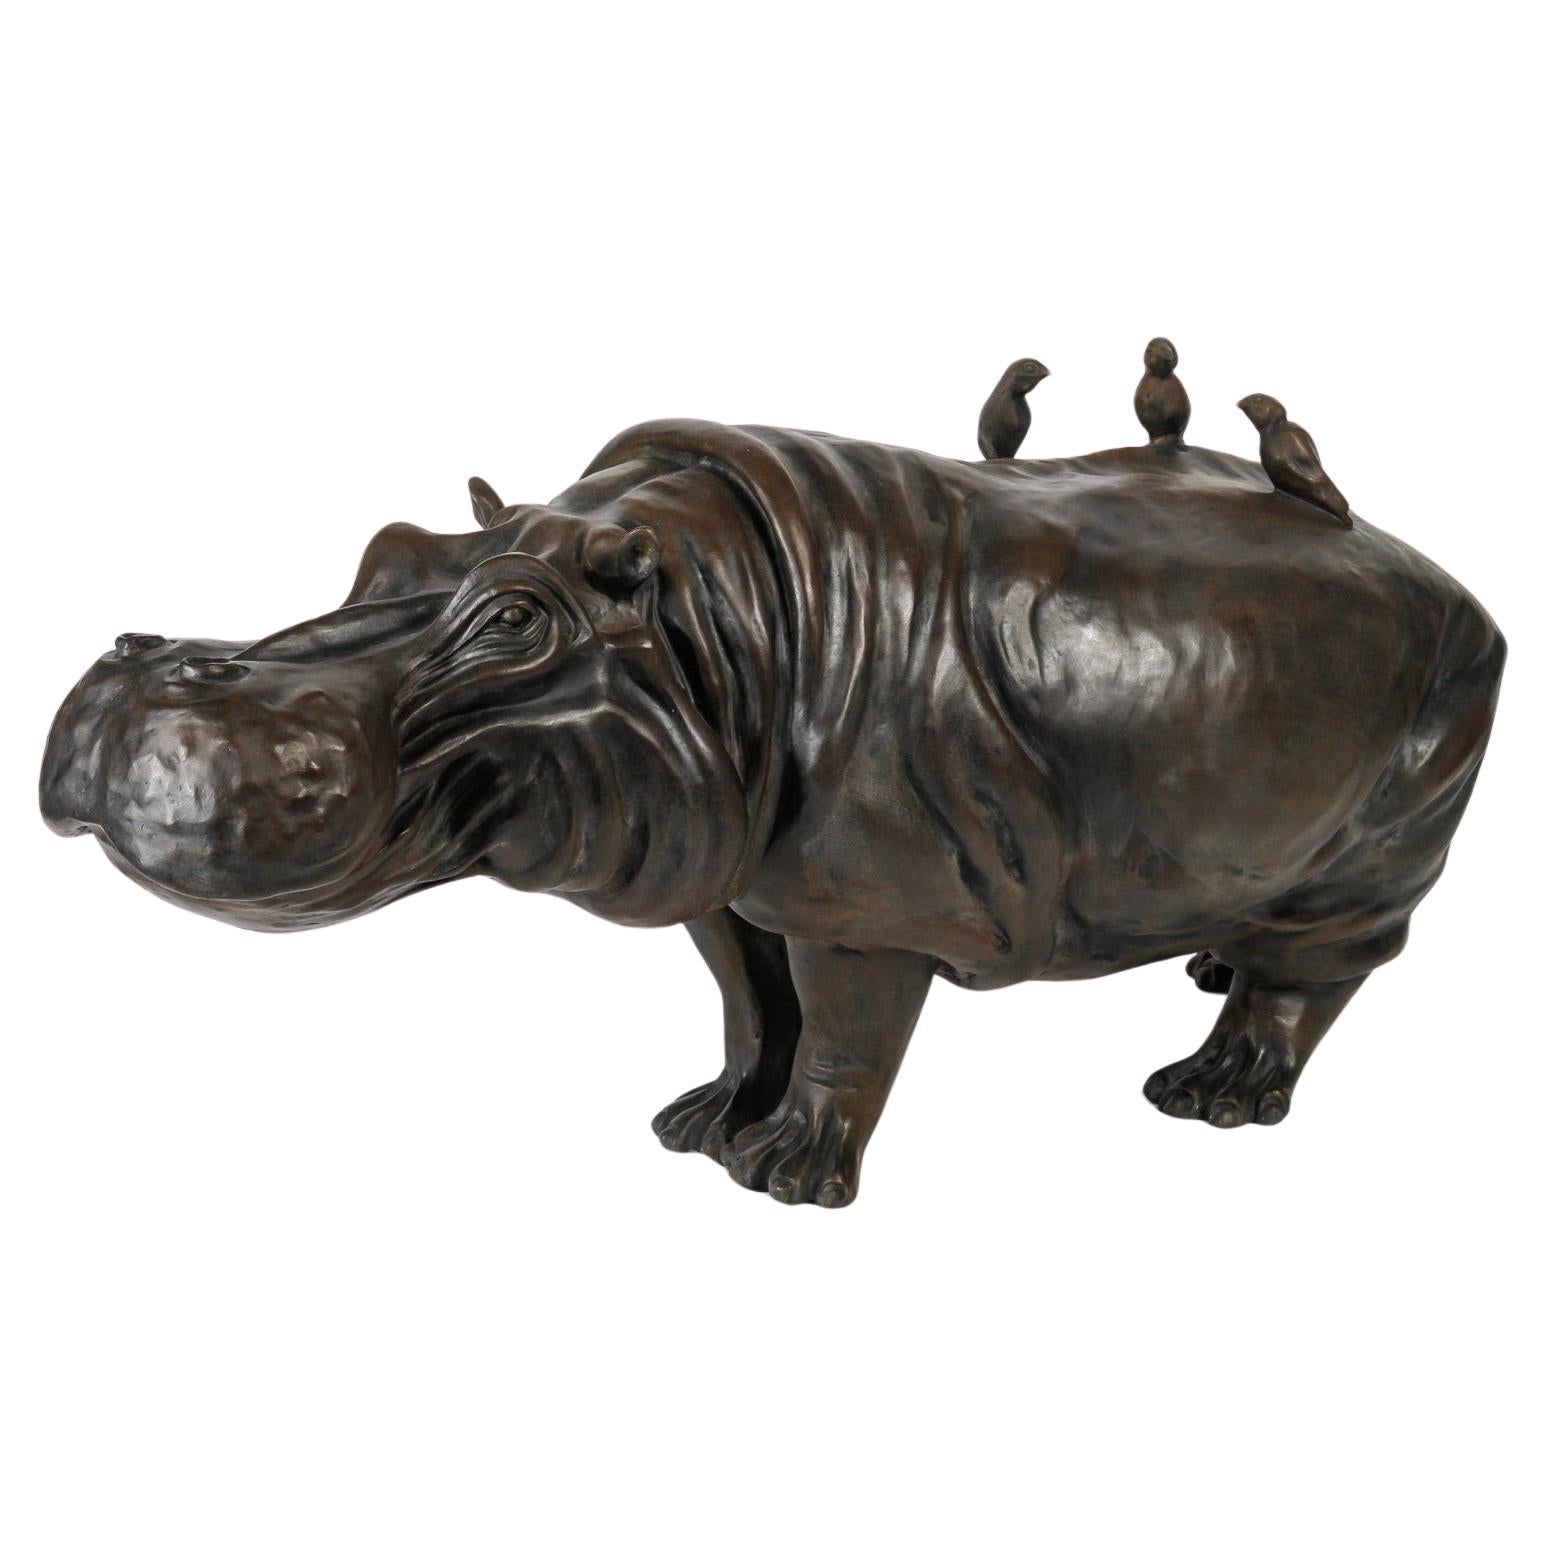 Bronze Sculpture of a Hippopotamus by Artist Hadrien David.